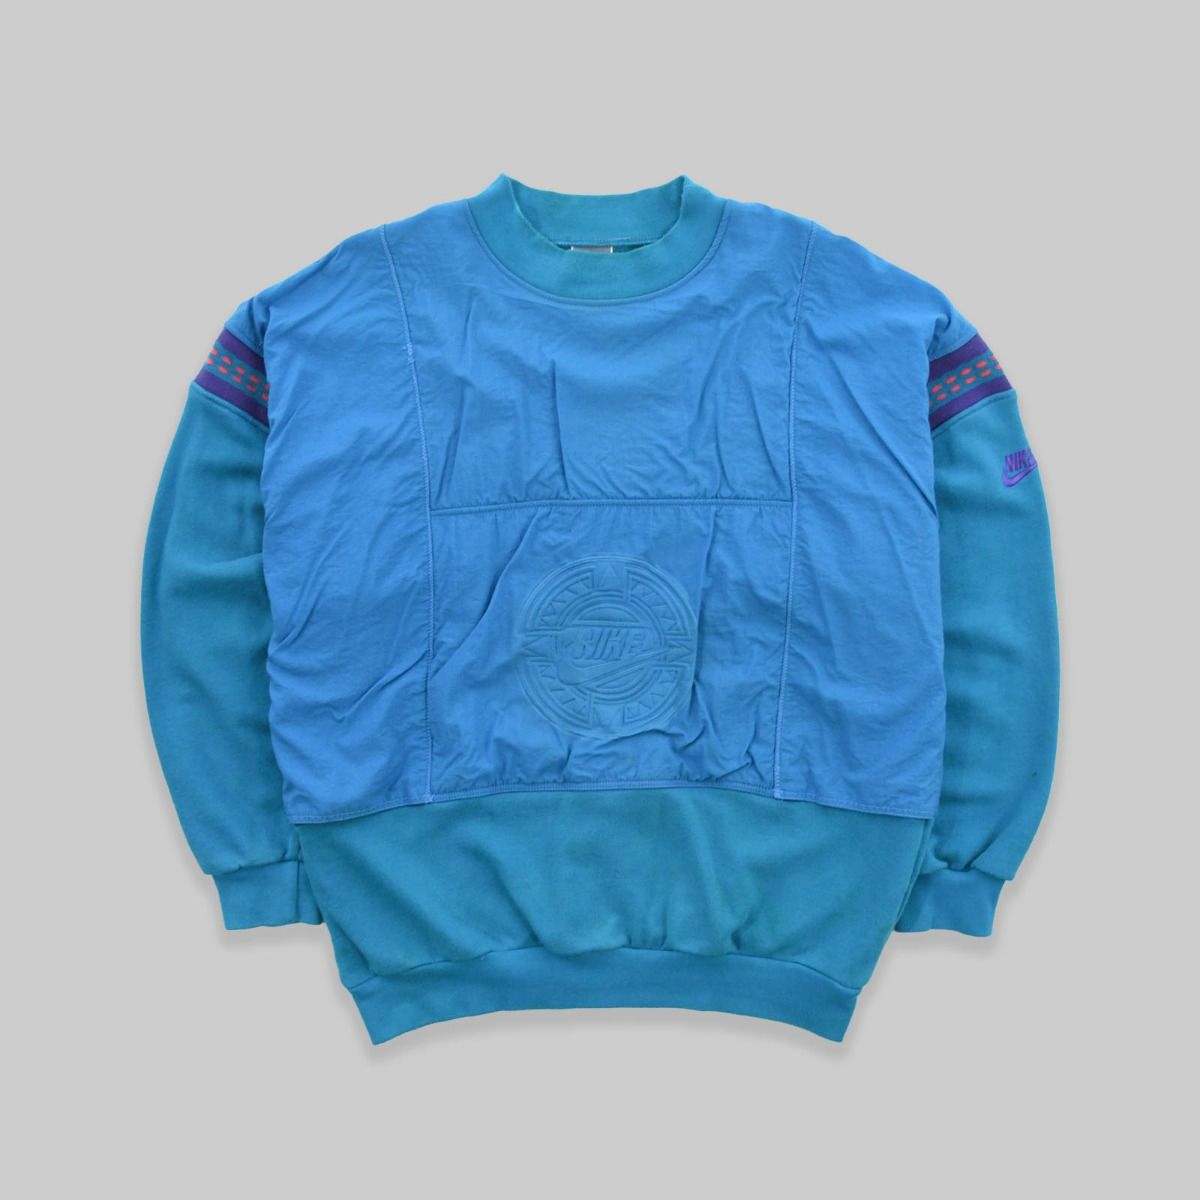 Nike Early 1990s Teal Sweatshirt